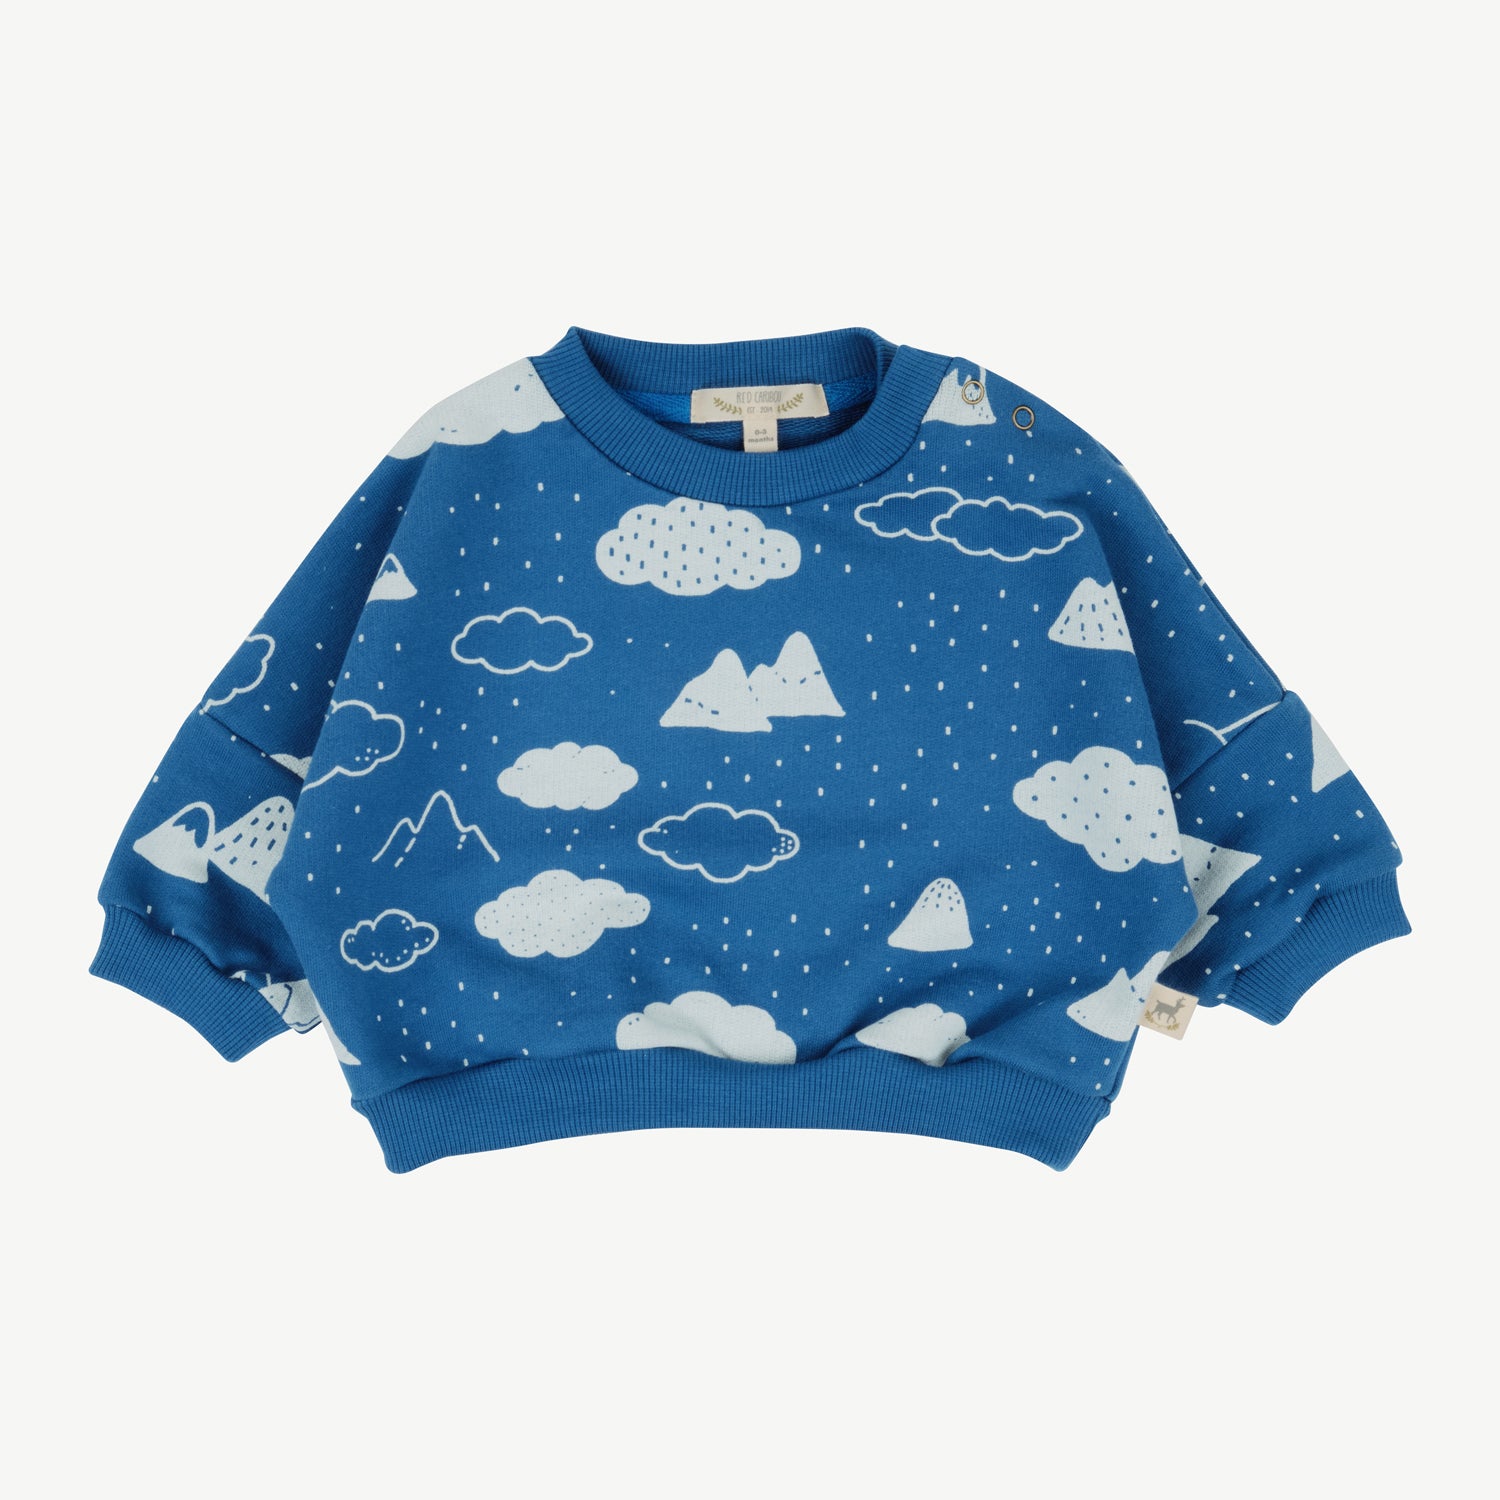 'amongst the clouds' dark blue sweatshirt